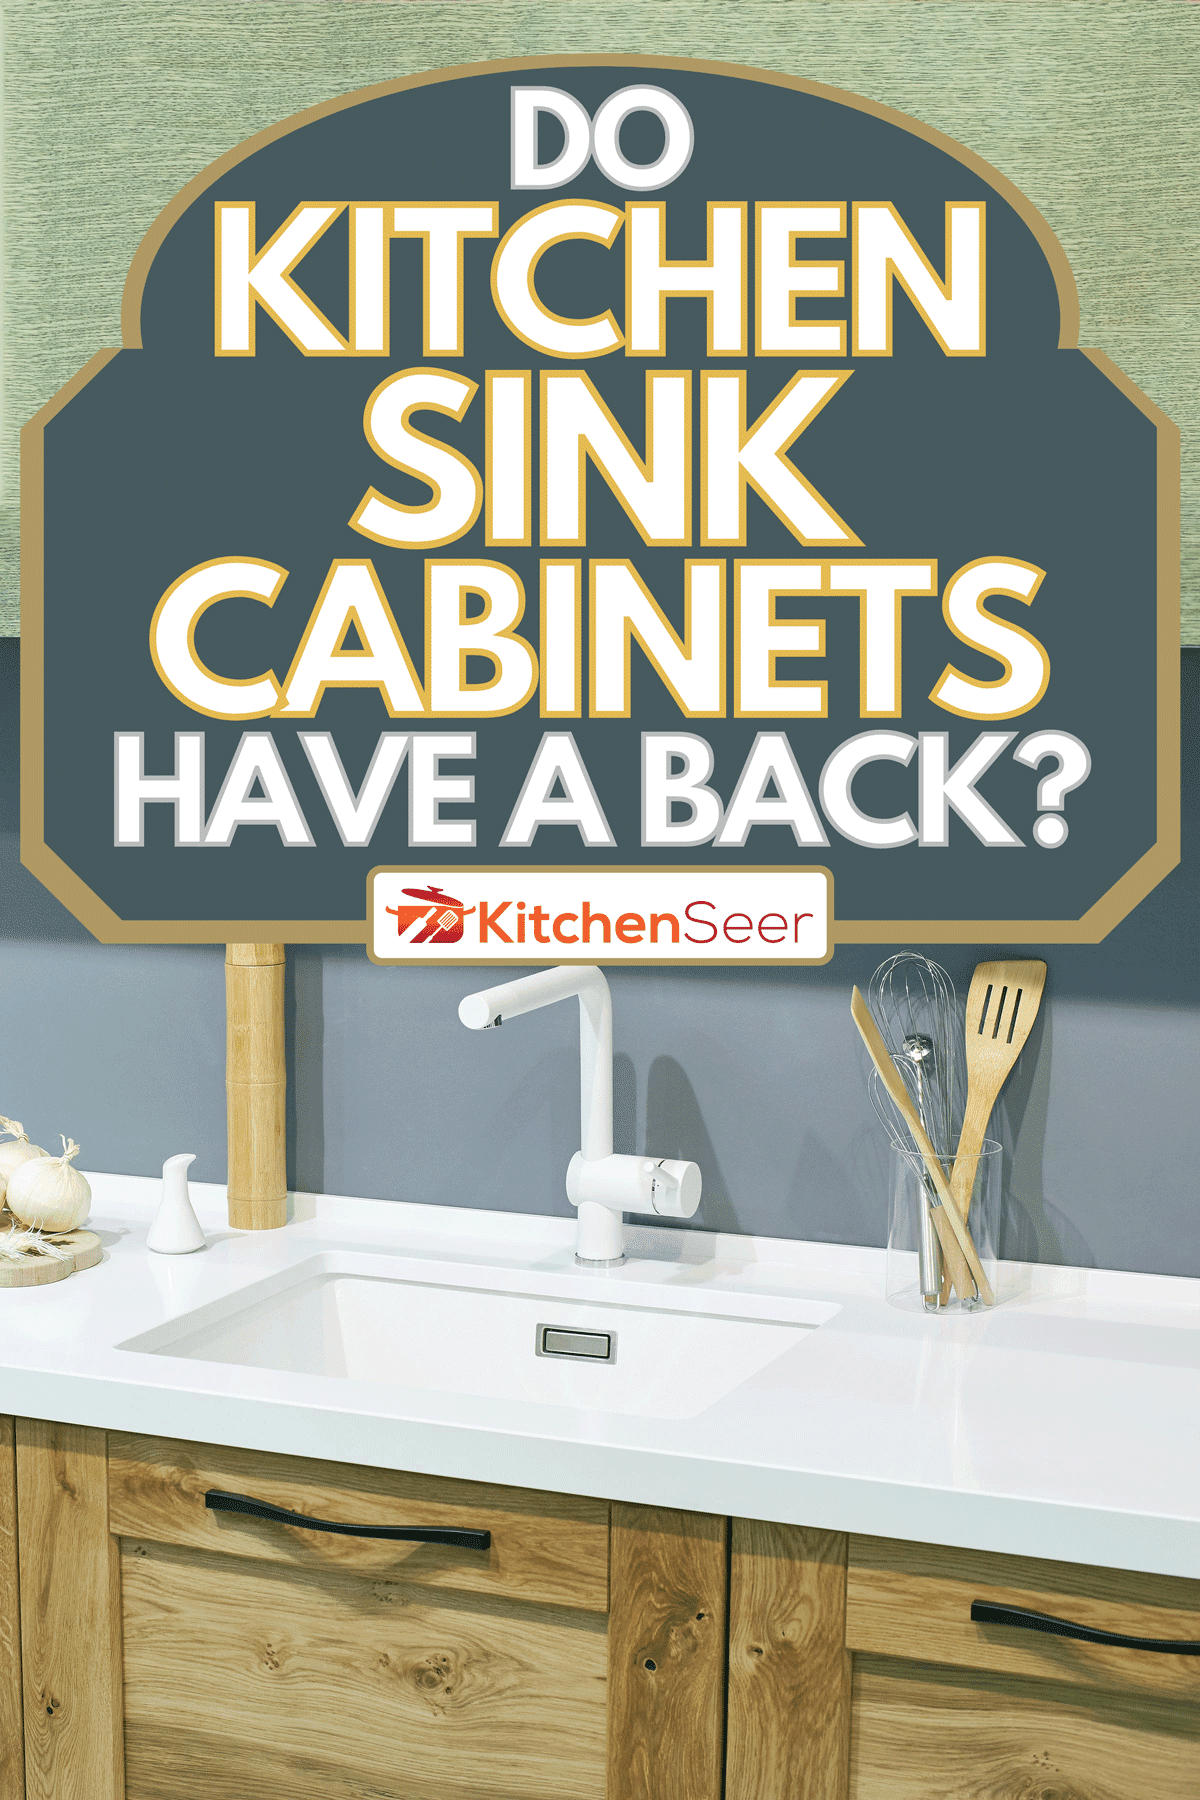 A modern kitchen sinks, Do Kitchen Sink Cabinets Have A Back?